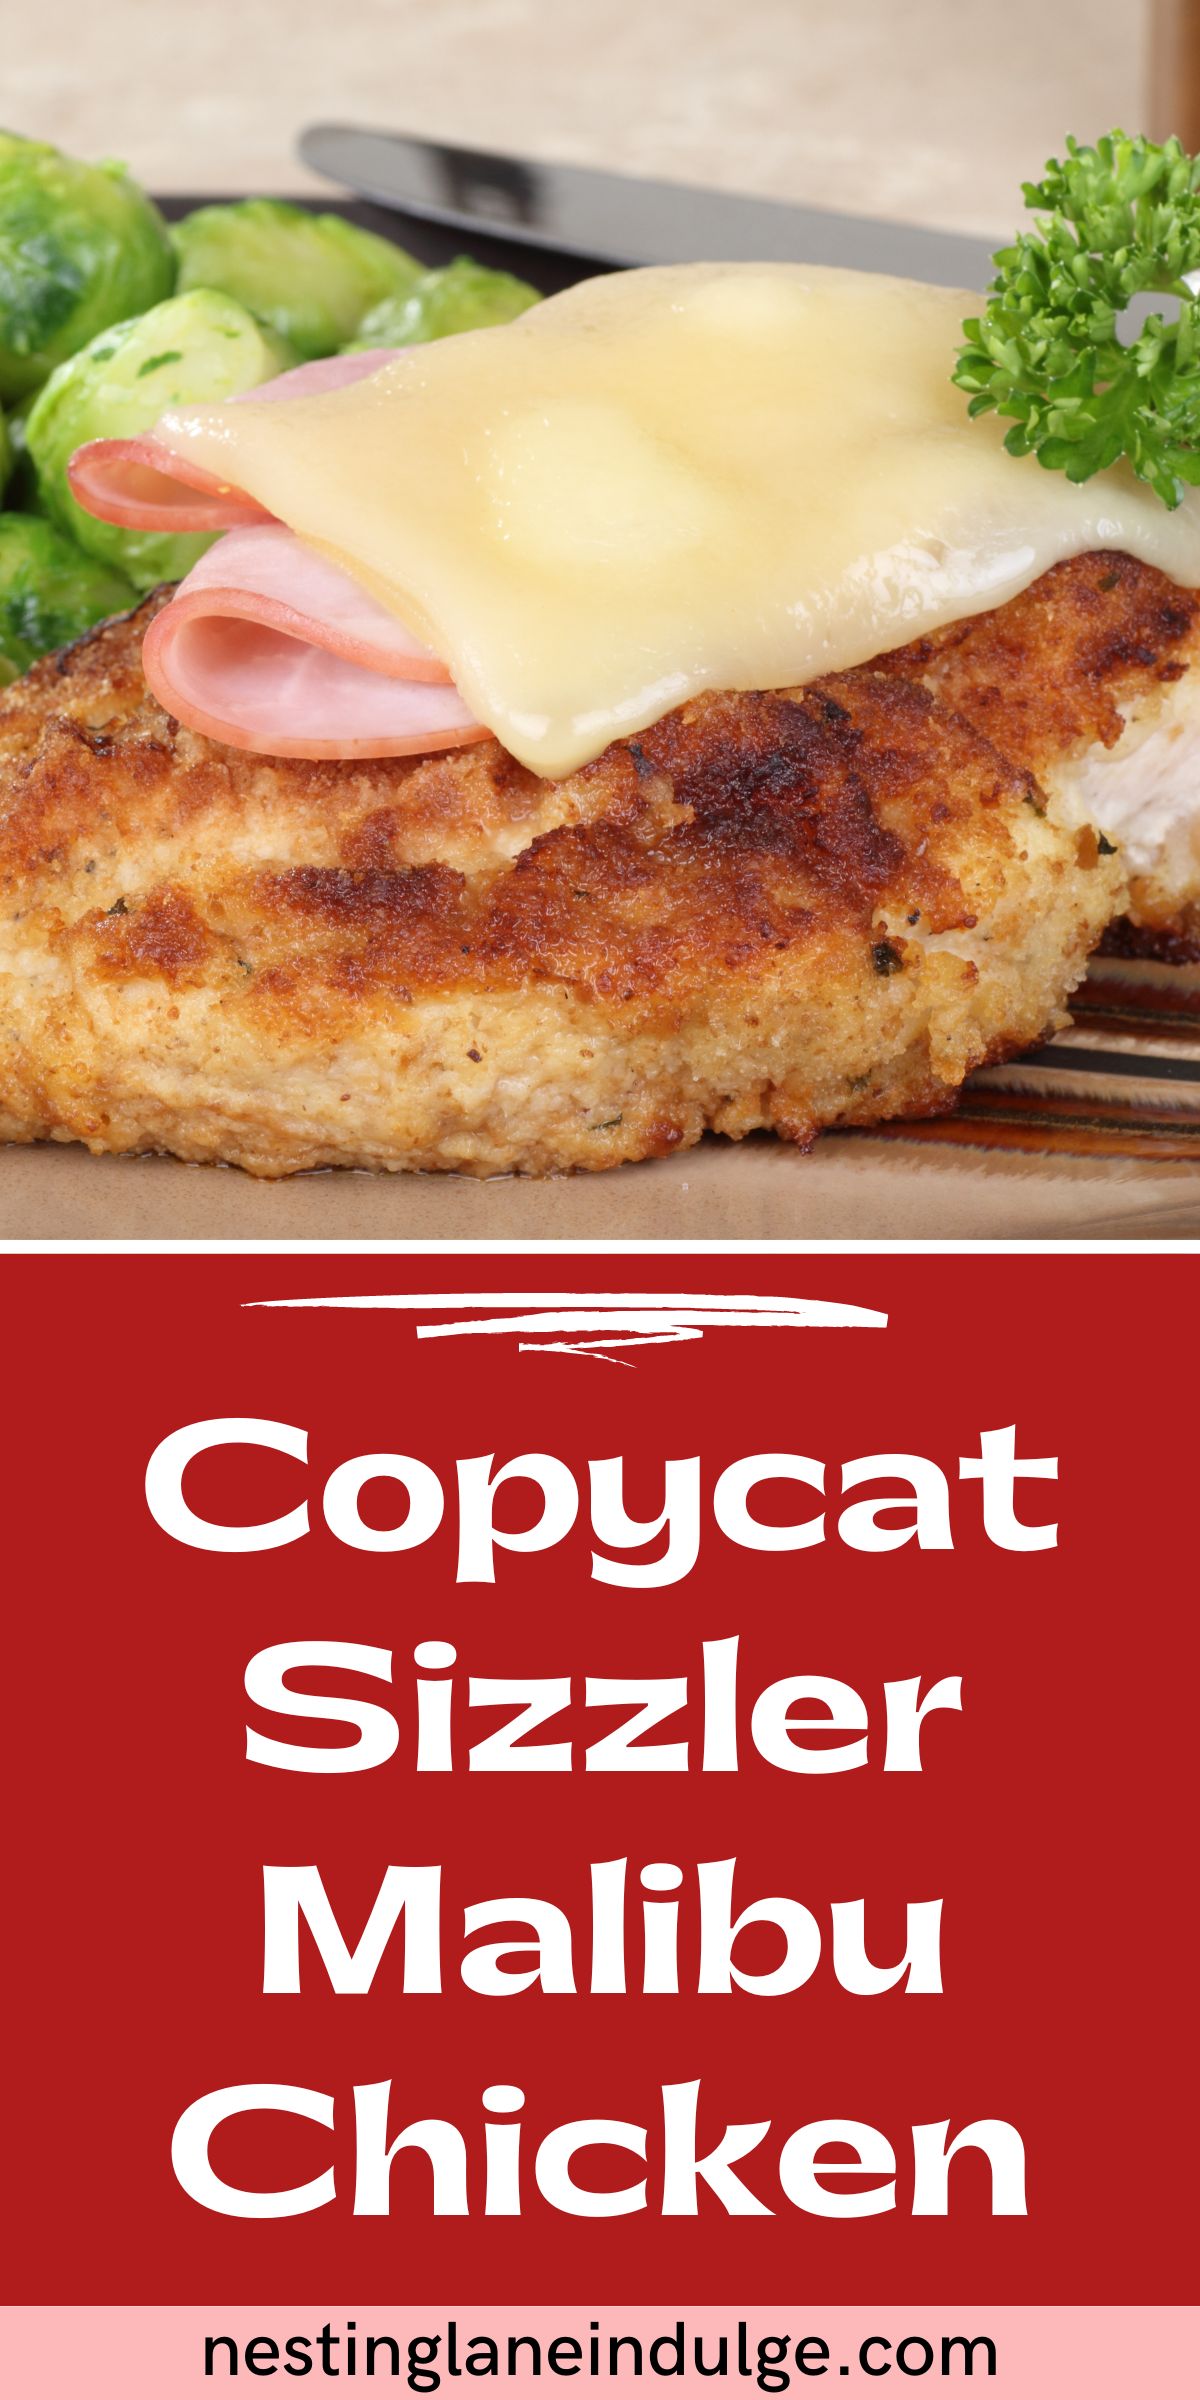 Graphic for Pinterest of Copycat Sizzler Malibu Chicken Recipe.